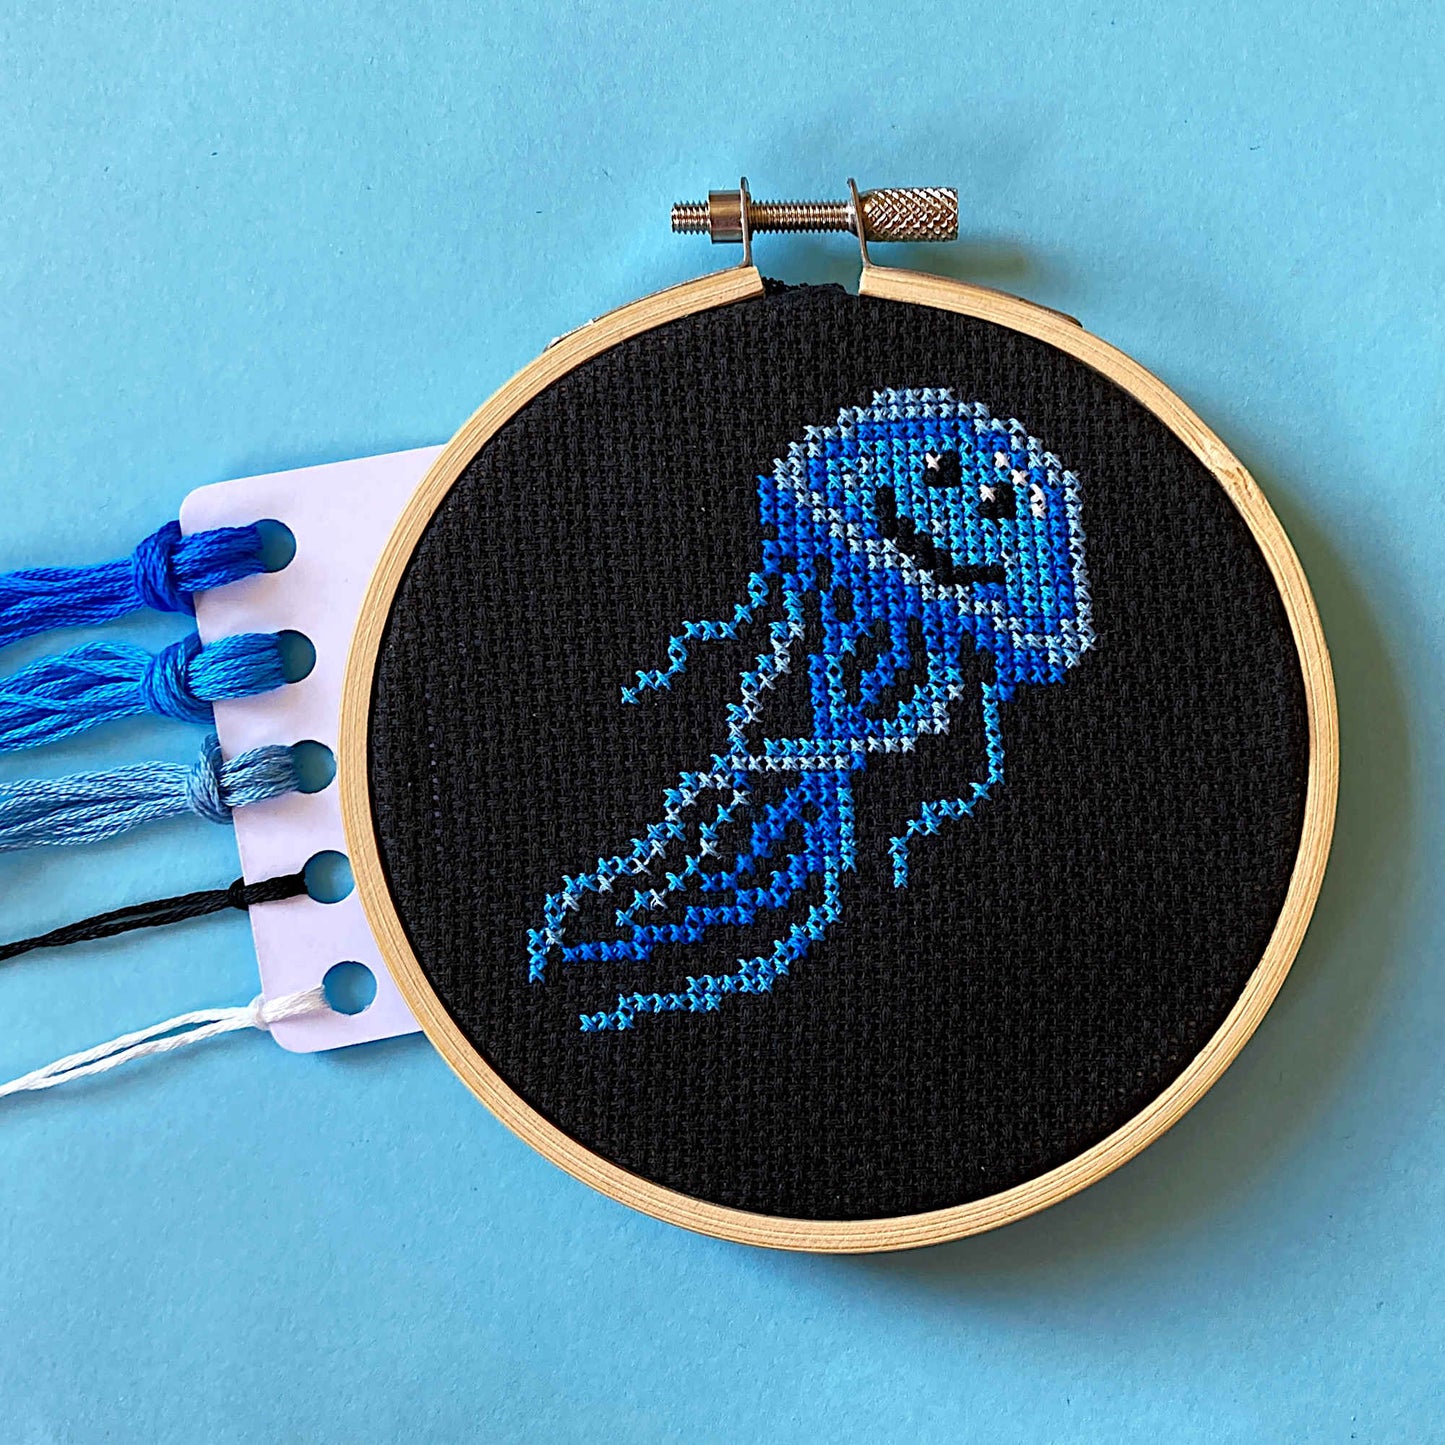 Jellyfish Cross Stitch Kit with DMC Embroidery Thread